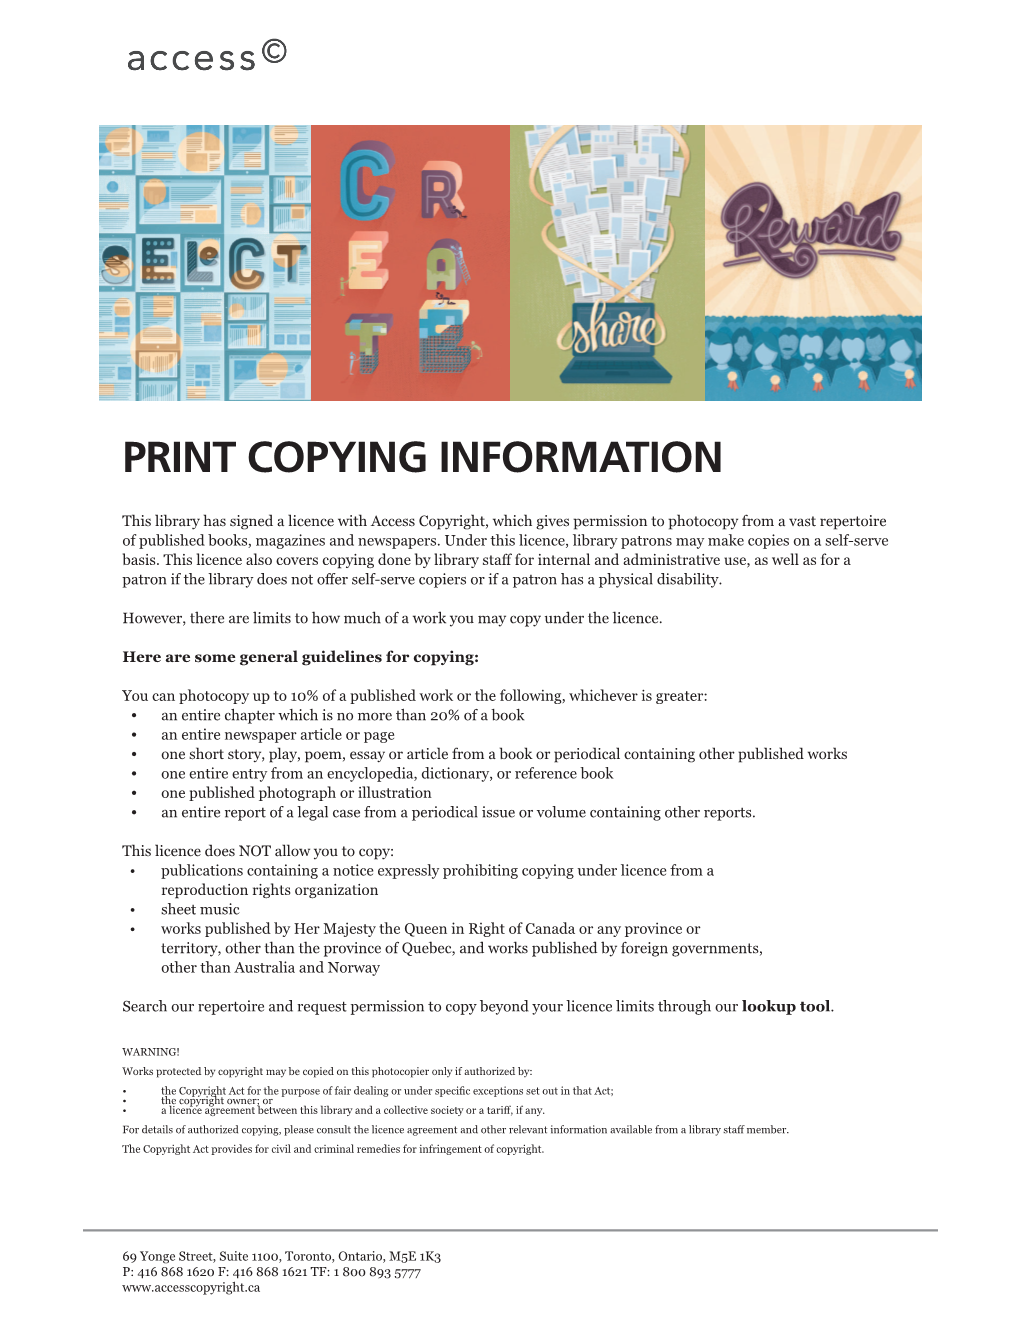 Print Copying Information